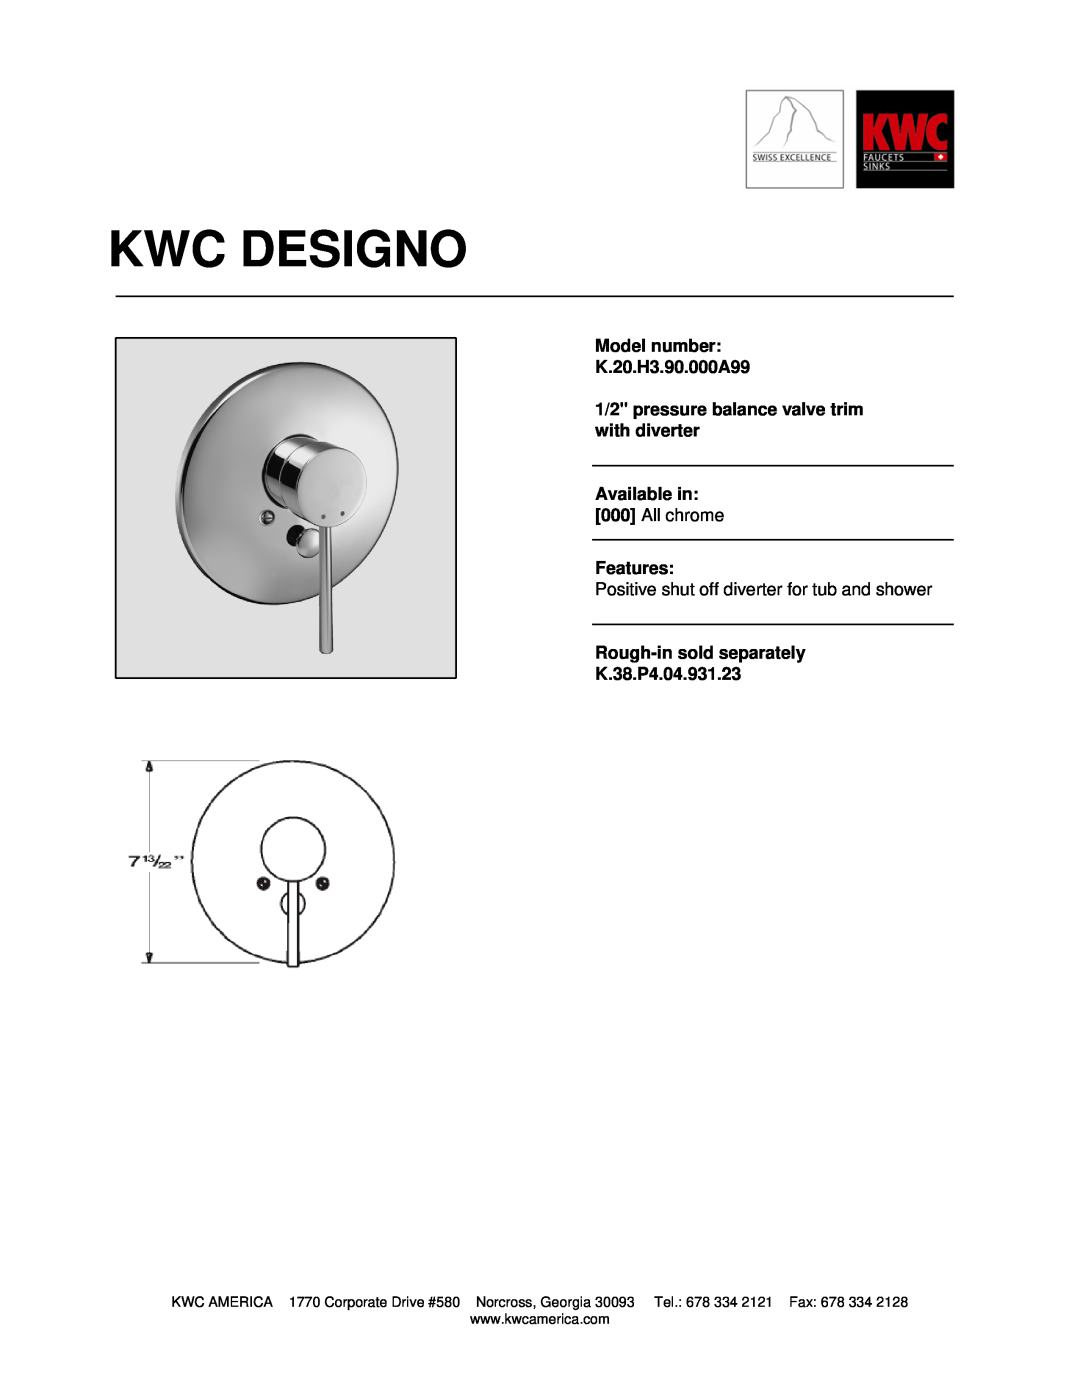 KWC manual Kwc Designo, Model number K.20.H3.90.000A99, 1/2 pressure balance valve trim with diverter 